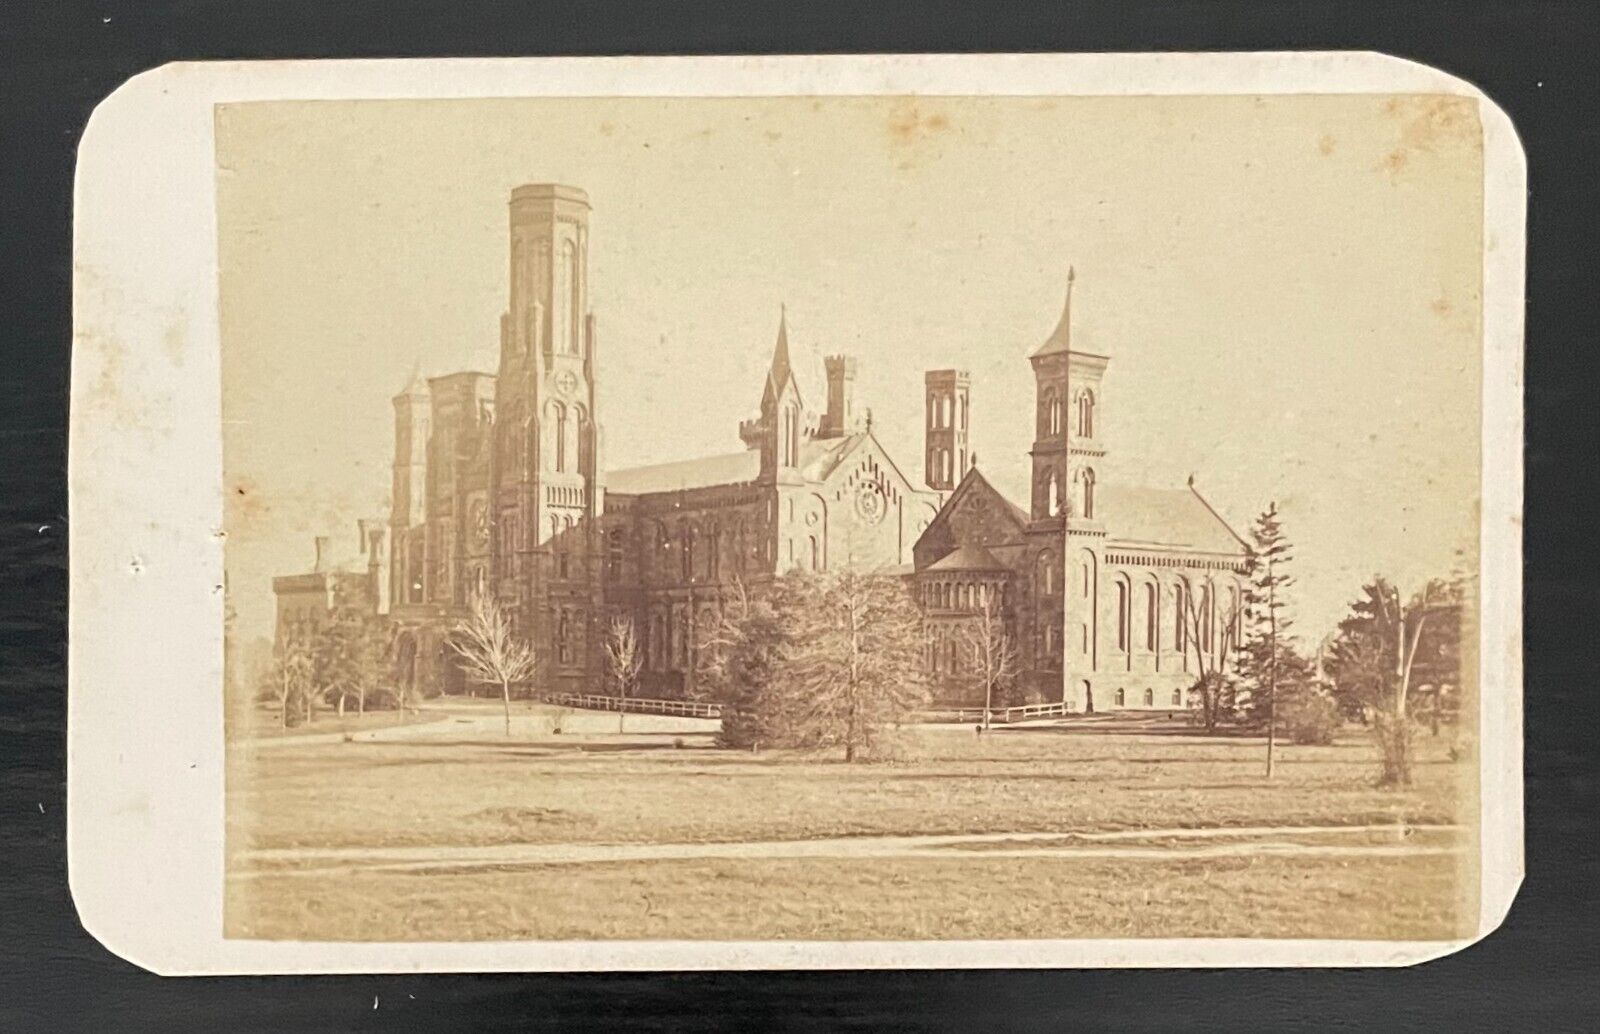 1860s SMITHSONIAN INSTITUTION BUILDING - ORIGINAL CDV PHOTOGRAPH